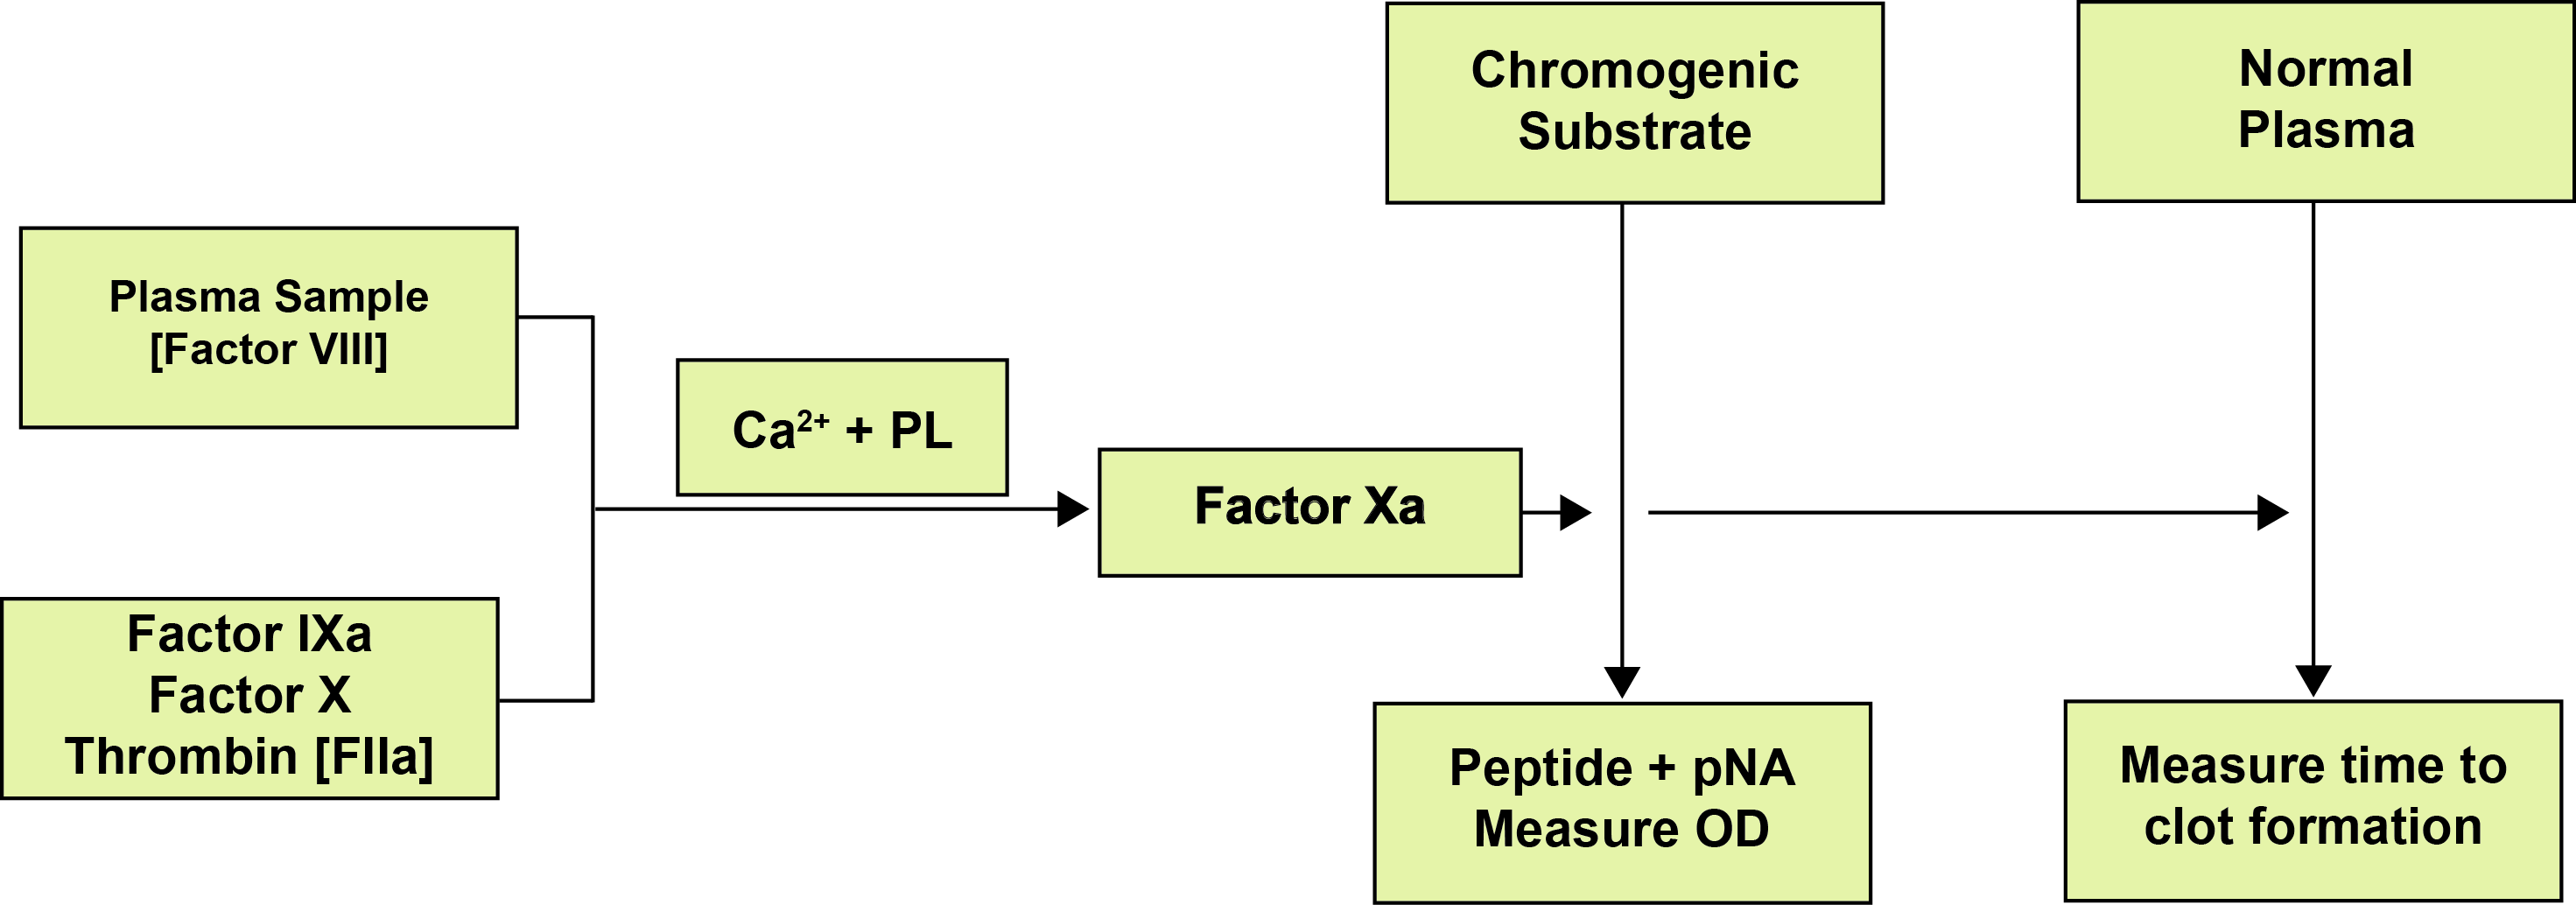 Figure outlining the Chromogenci FVIII assay